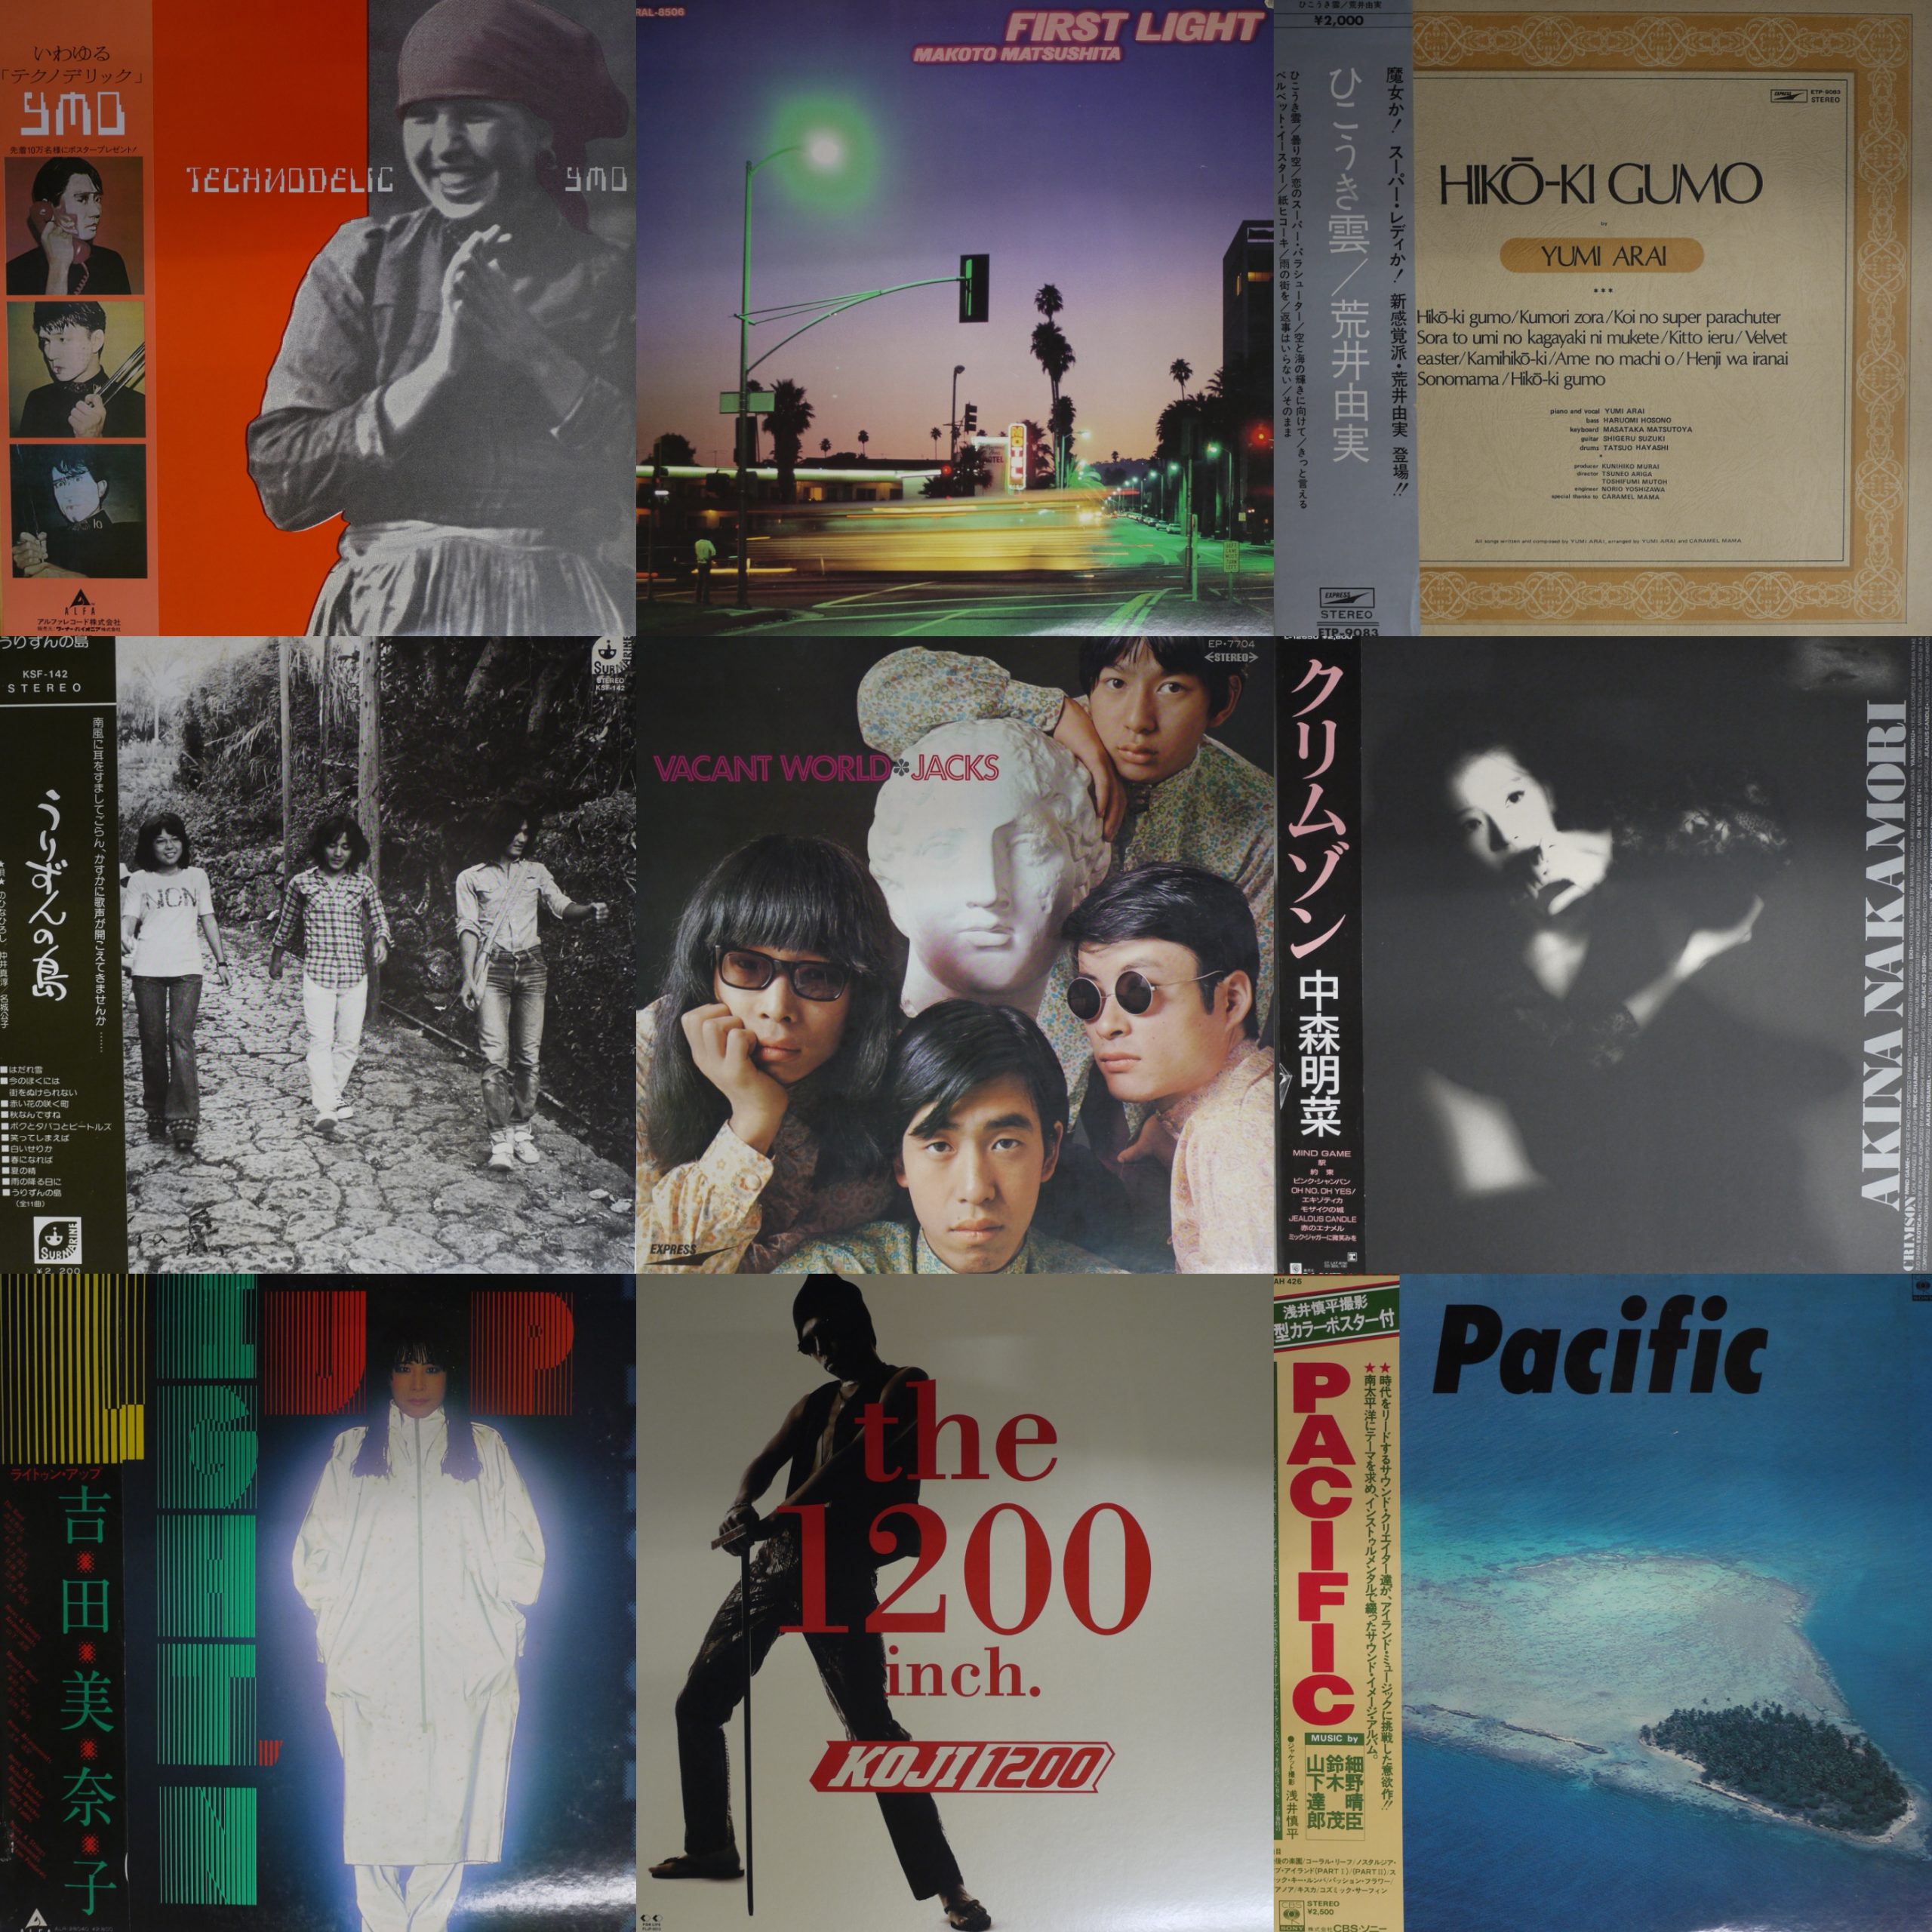 2023/01/21(SAT) 和モノ LP SALE – General Record Store